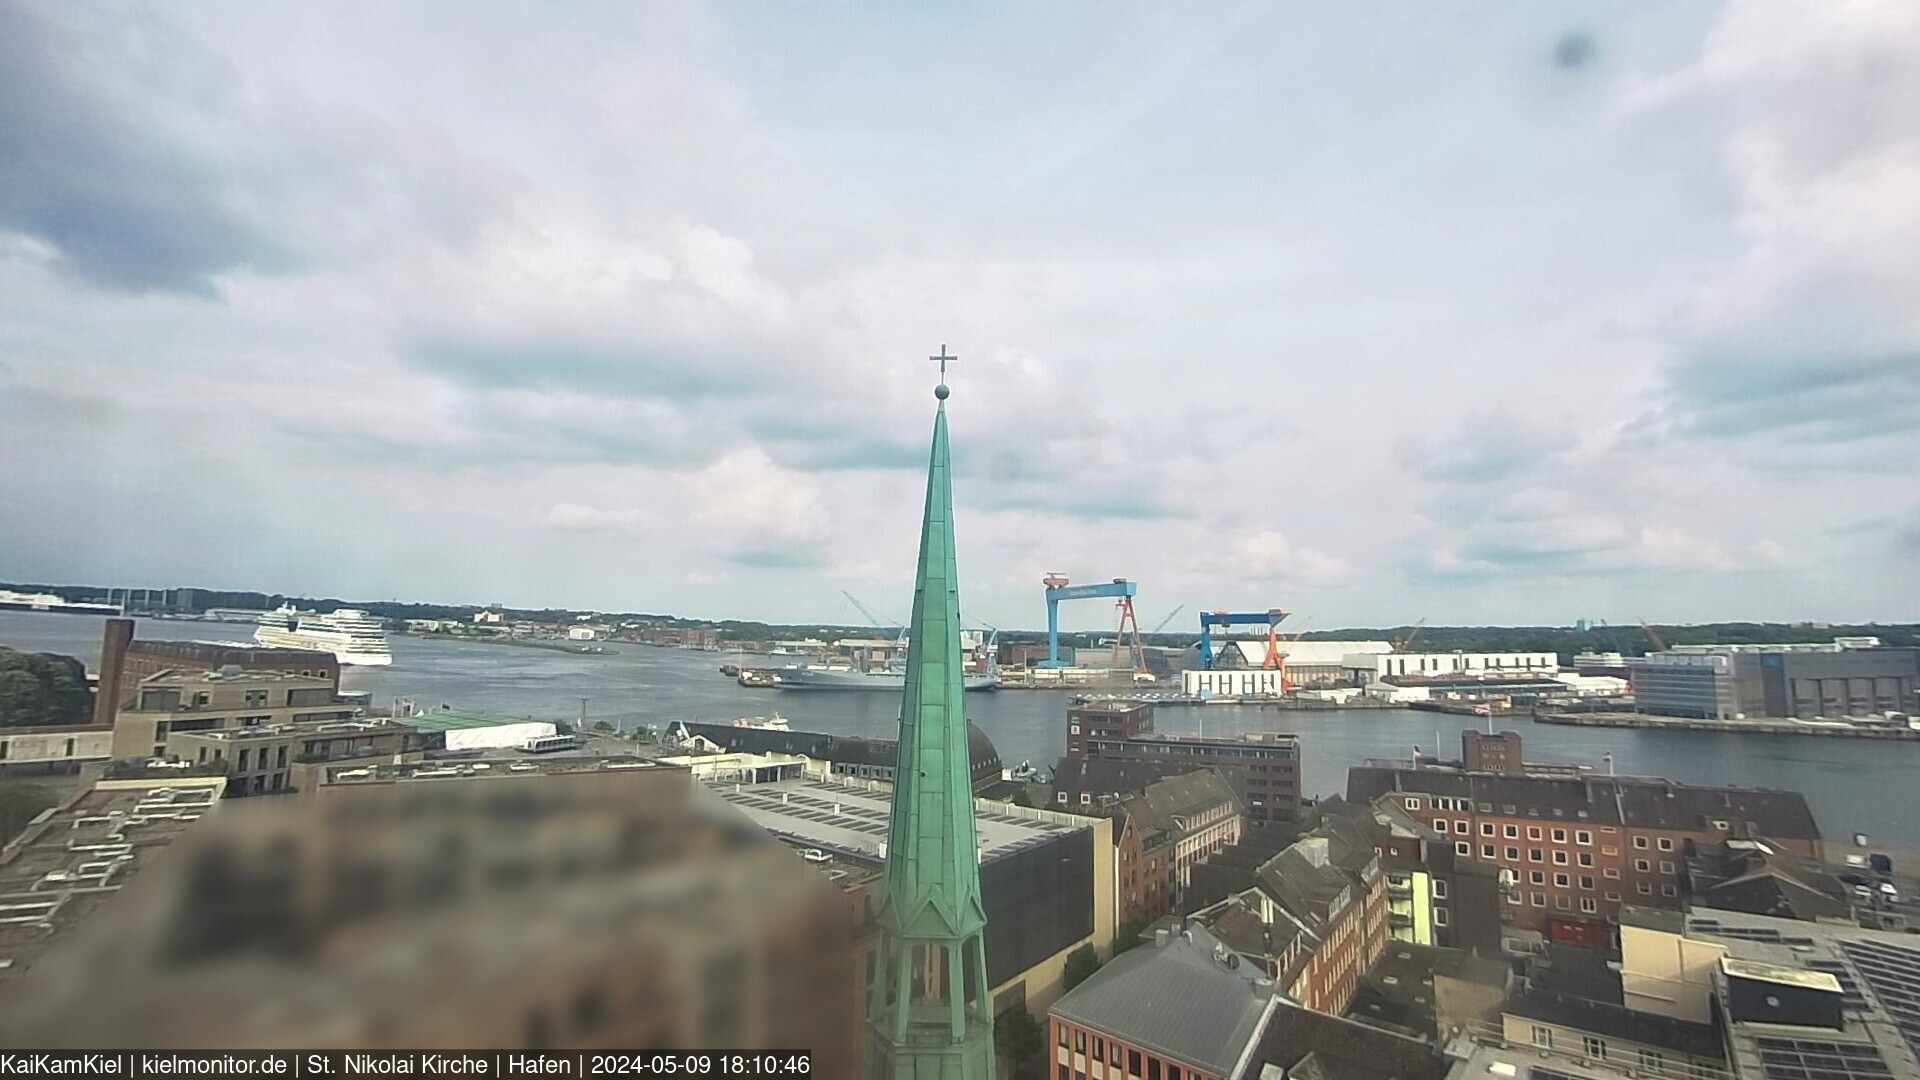 Webcam For The Port Of Kiel